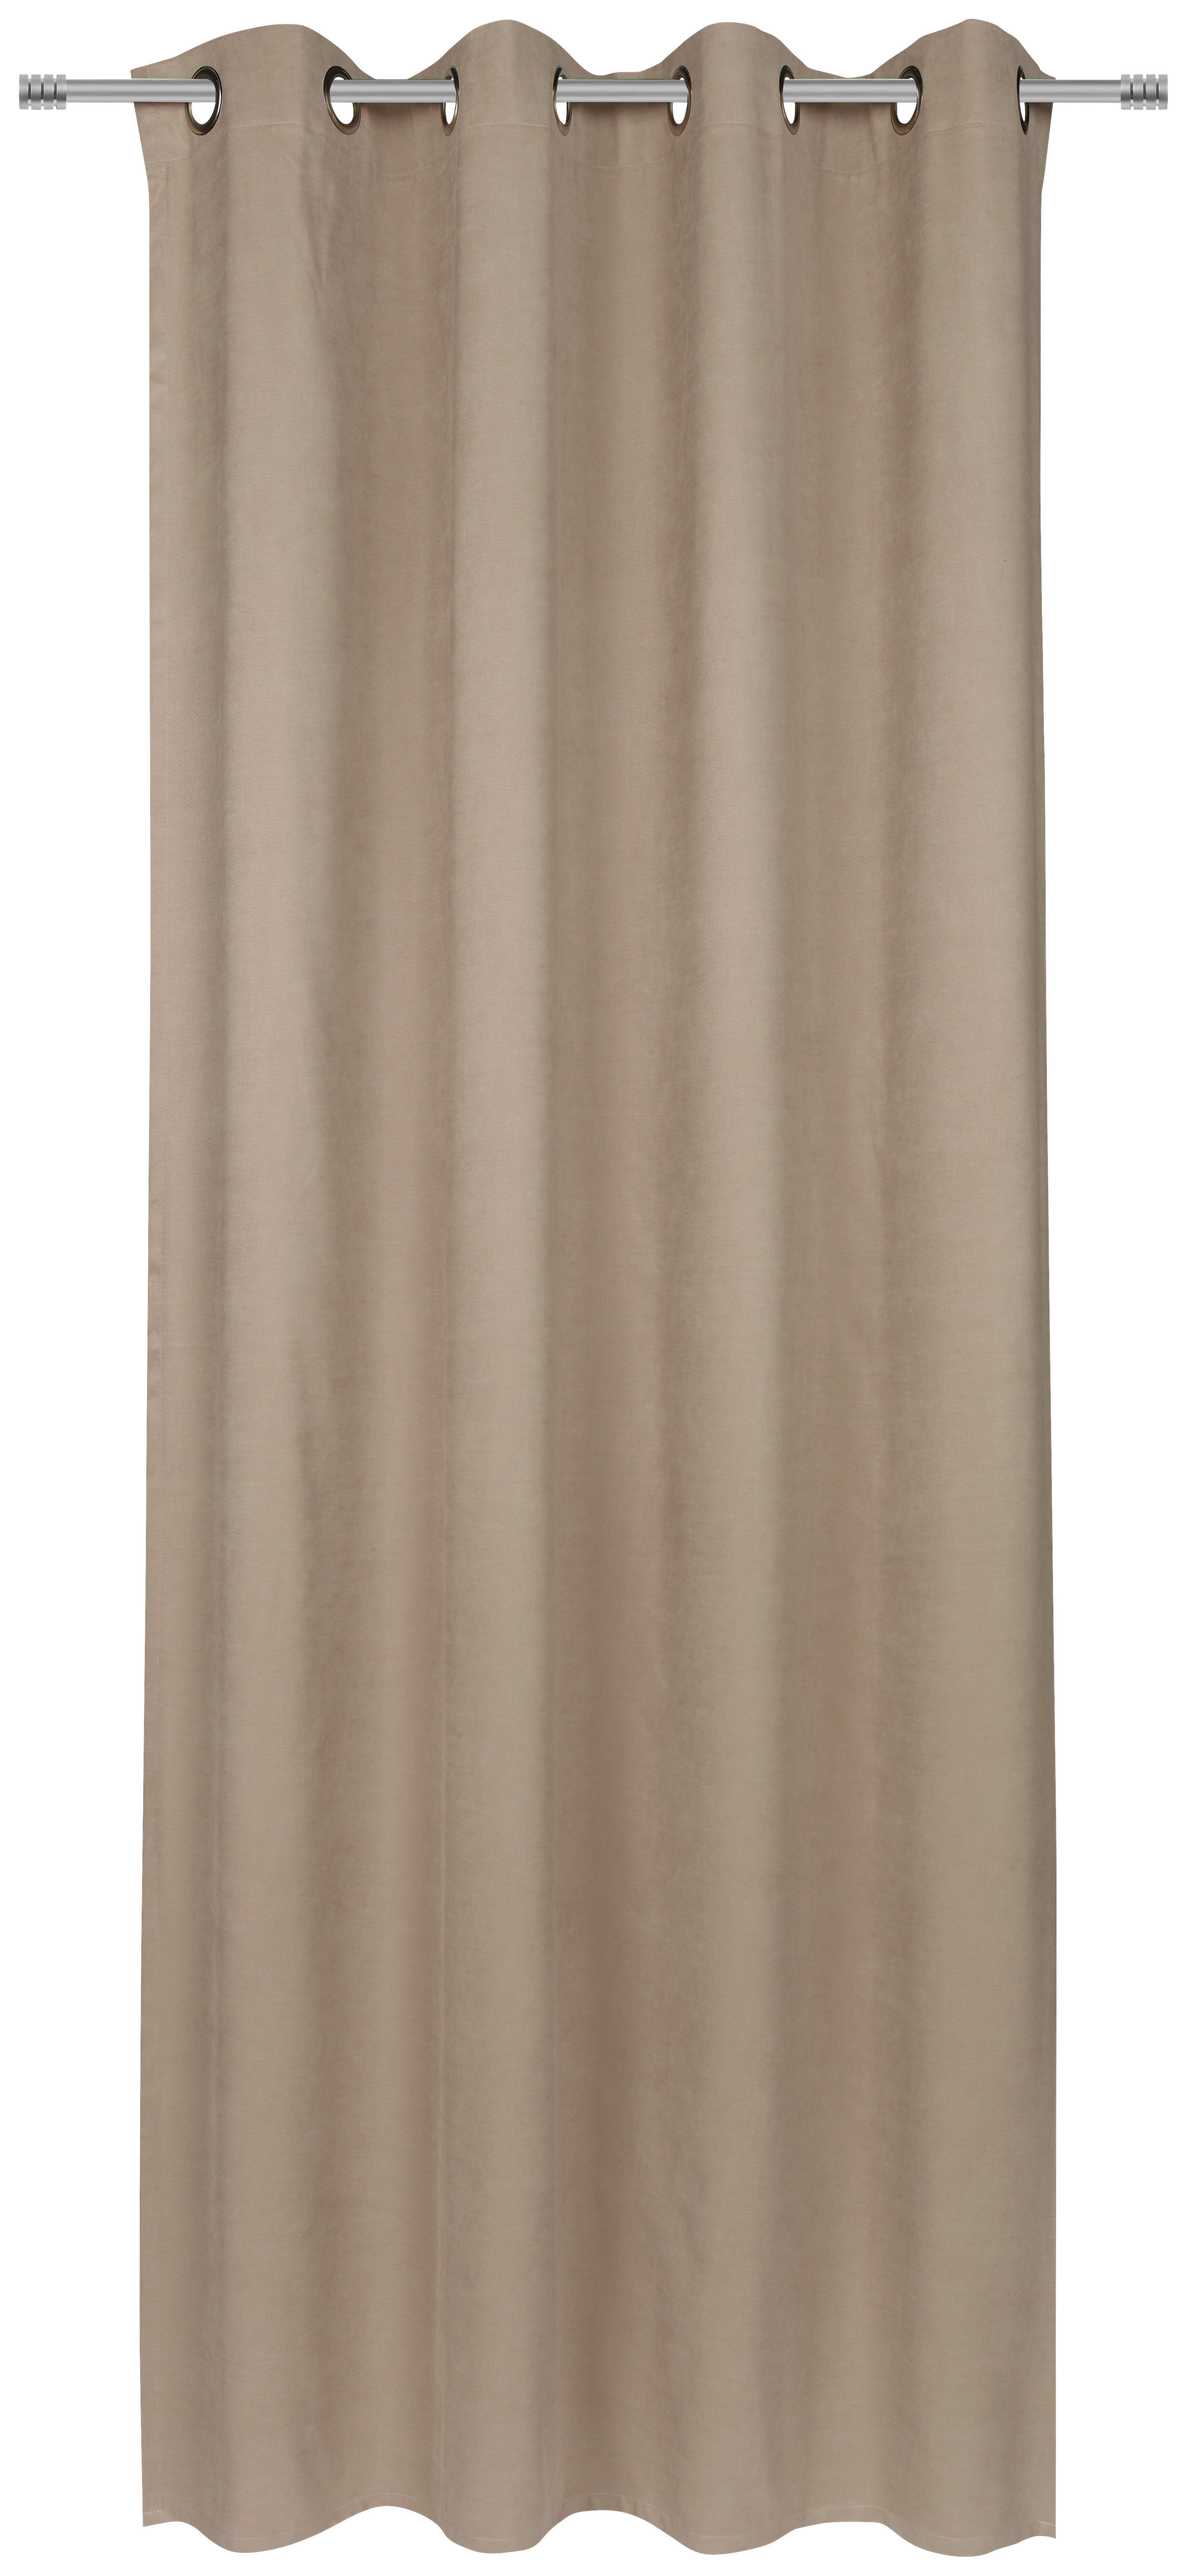 ZAVESA SA KARIKAMA sivo-braon - sivo-braon, Konvencionalno, tekstil (140/245cm) - Esposa